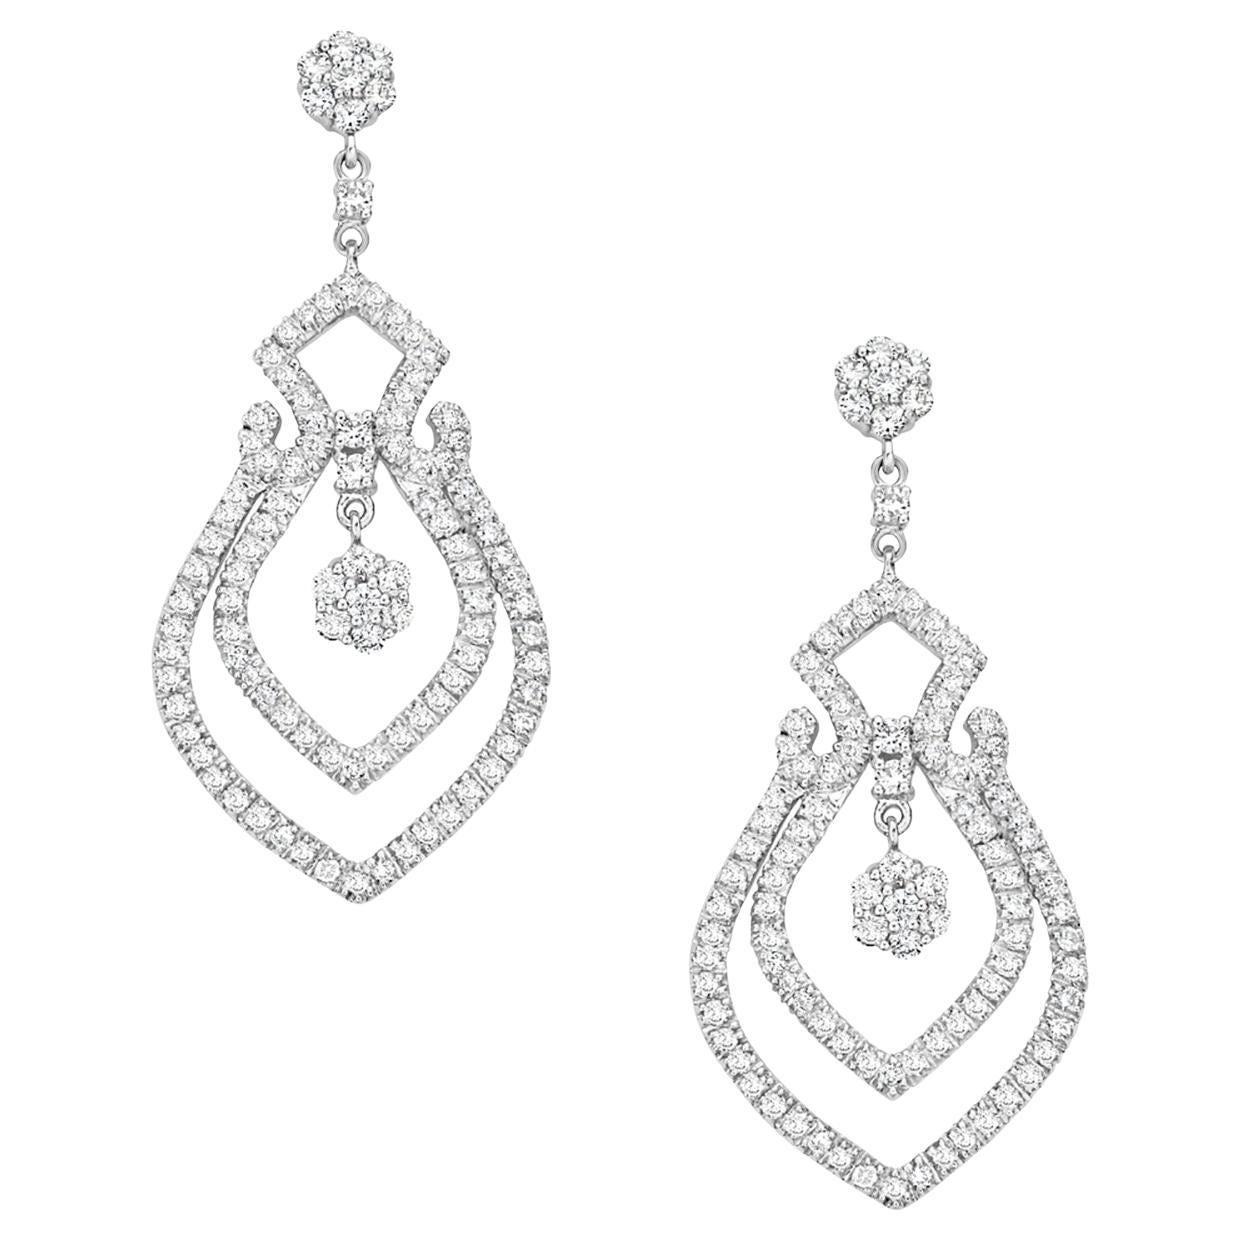 High Quality VS Diamonds Dangle Earrings Made in 18k White Gold